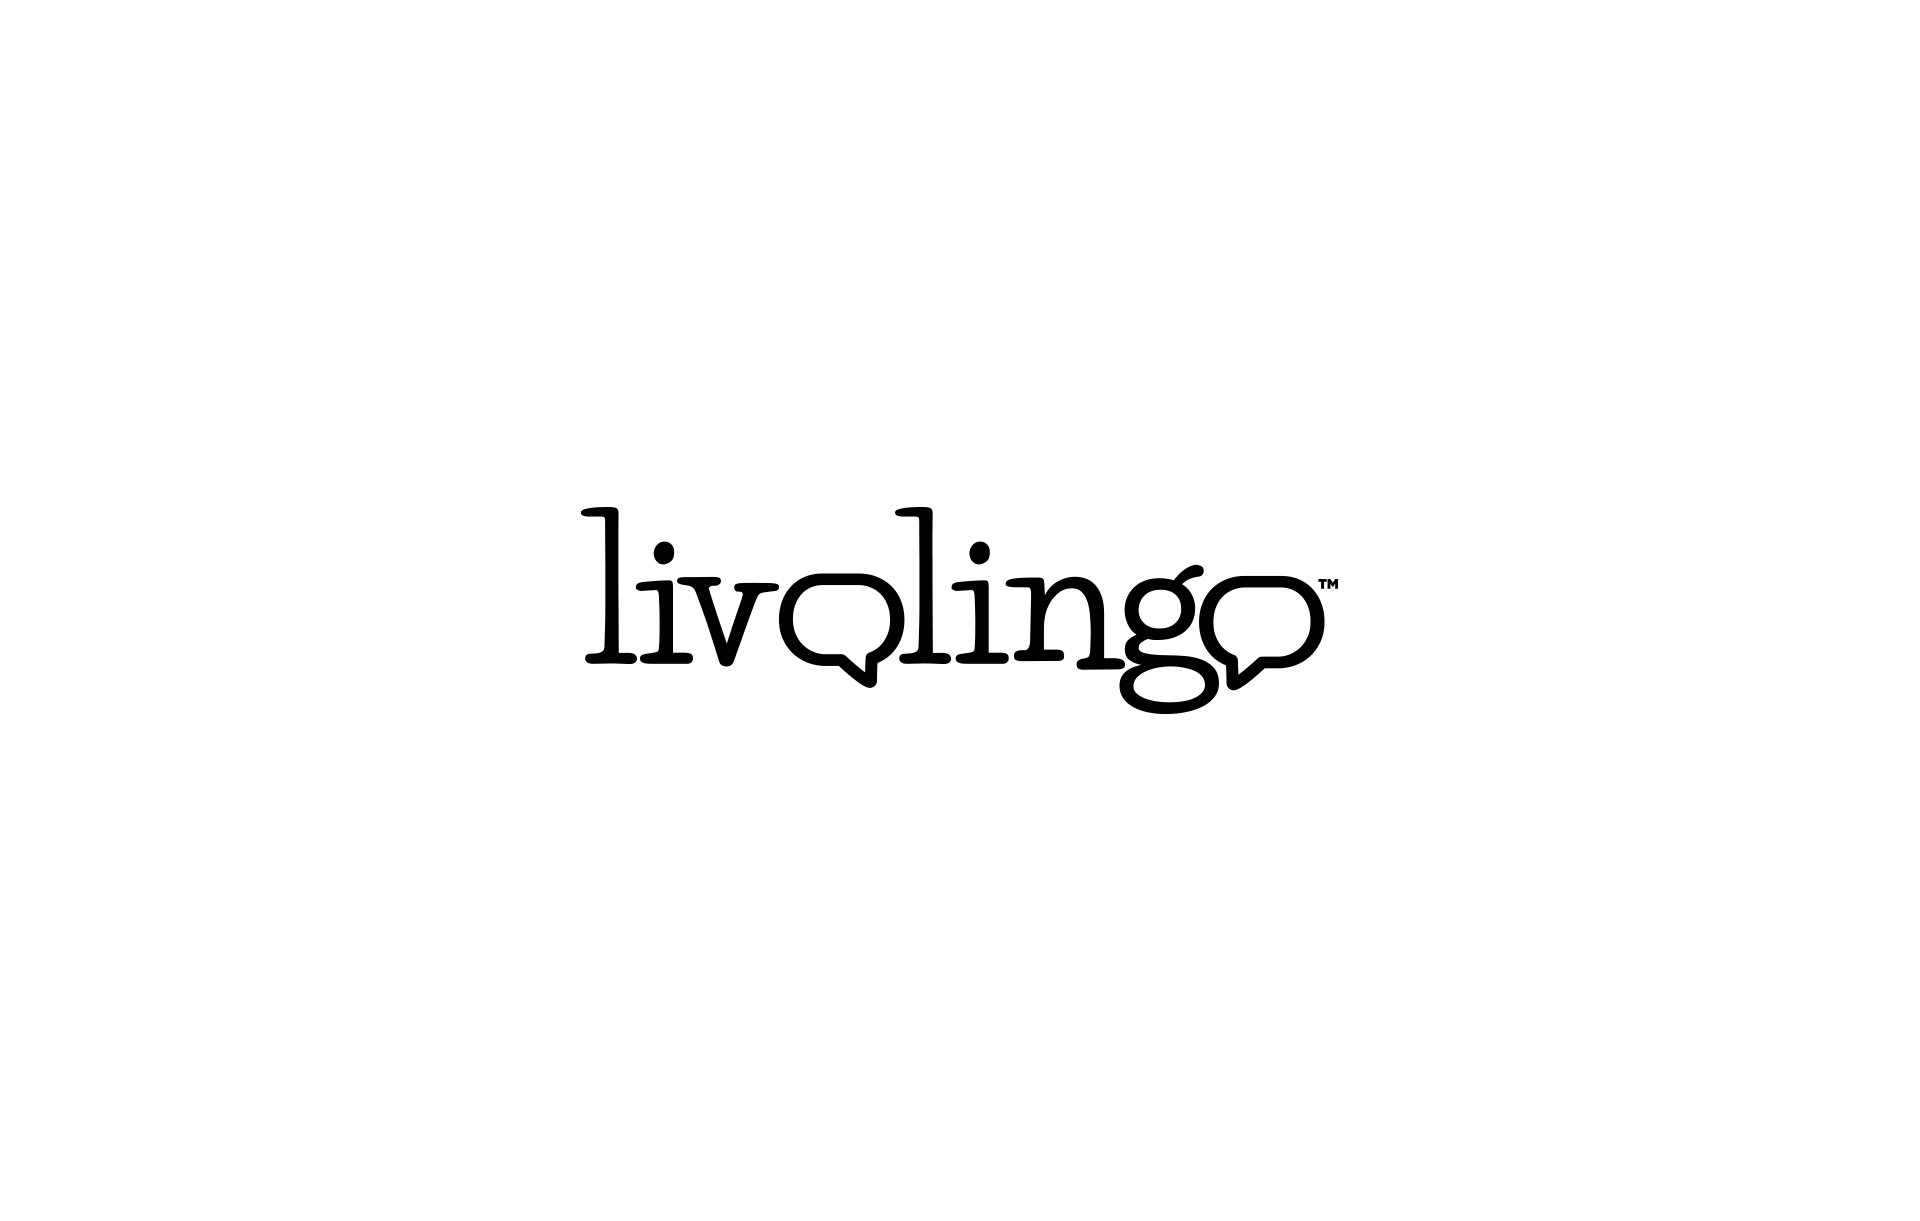 Livolingo Logo Design By Scott Luscombe